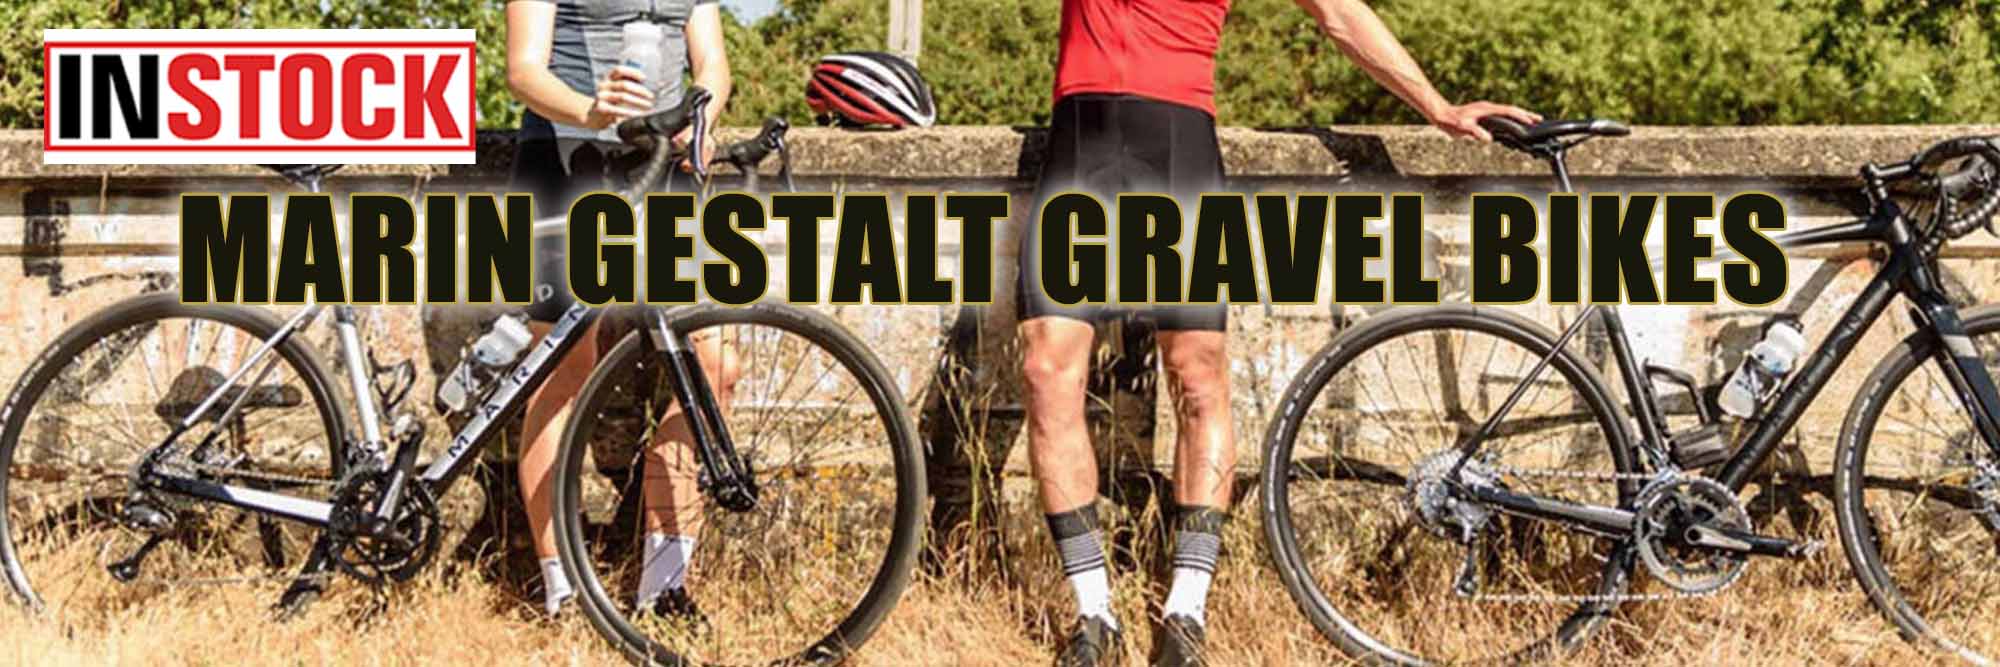 Marin Gestalt Gravel Bikes In-Stock